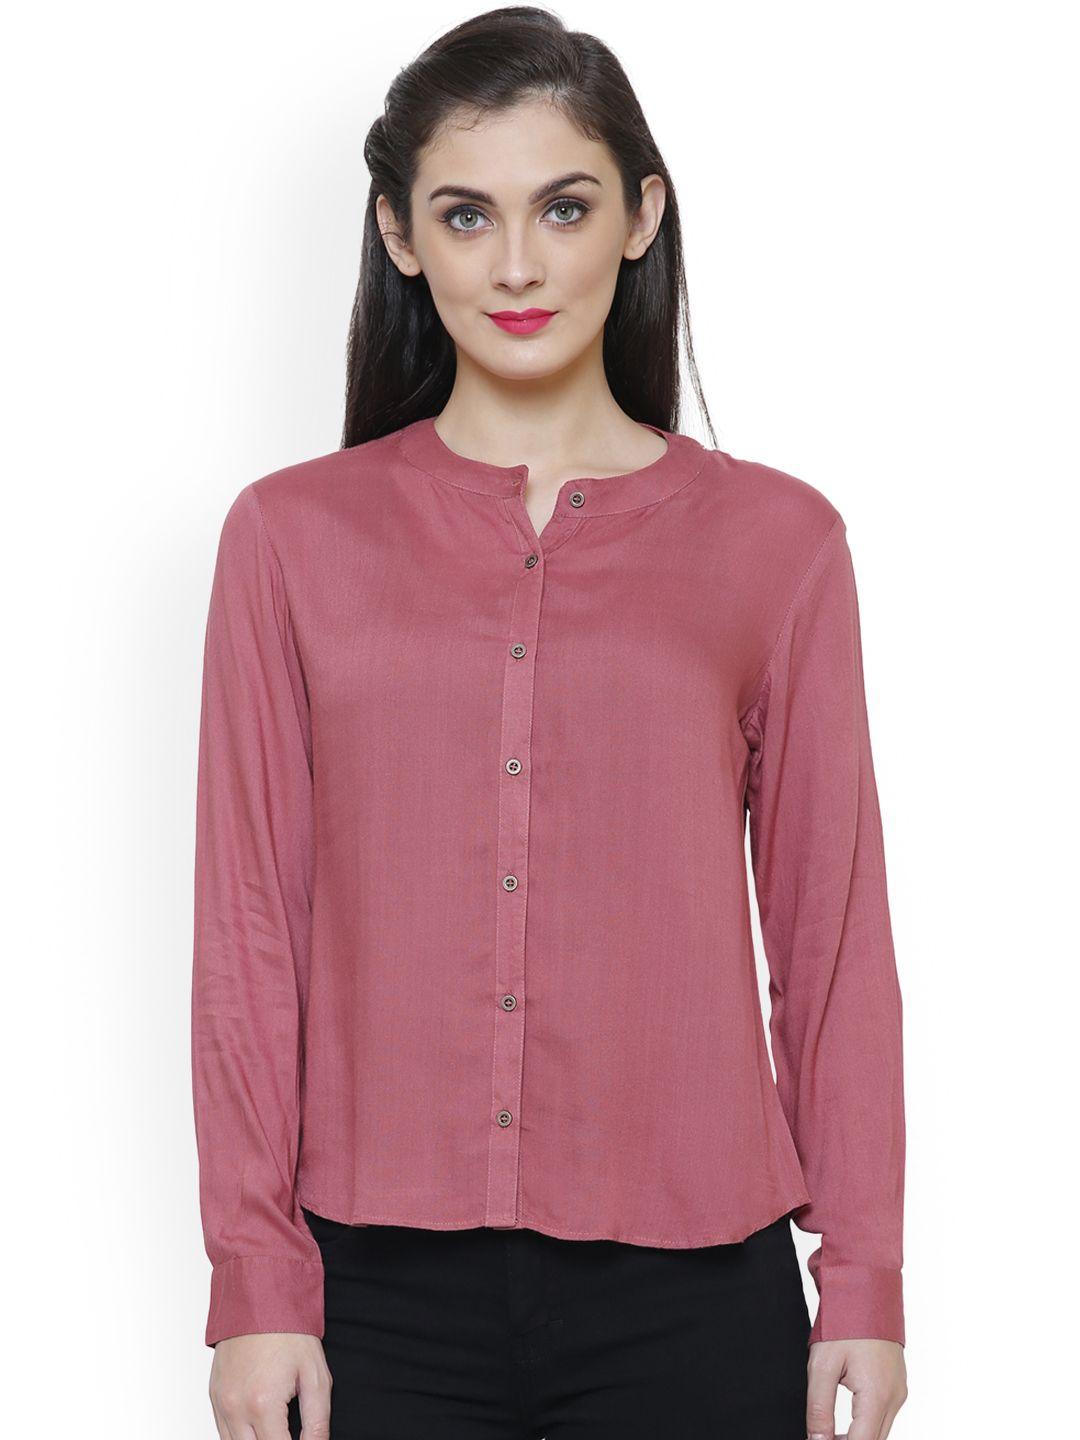 tshirtcompany women peach-coloured standard regular fit solid casual shirt